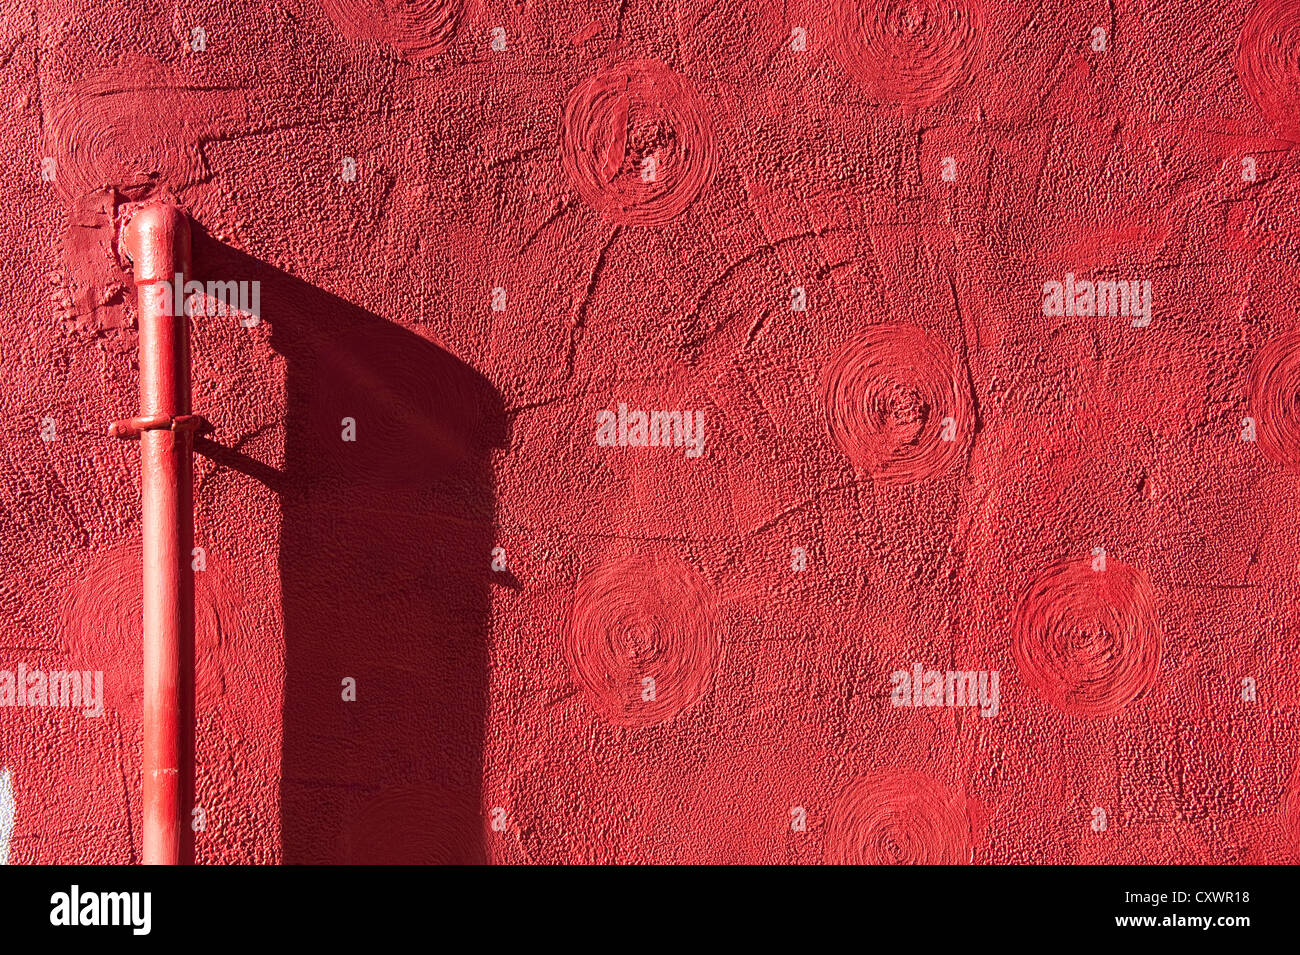 Tubo de pared roja soleada duras larga sombra fine art Foto de stock